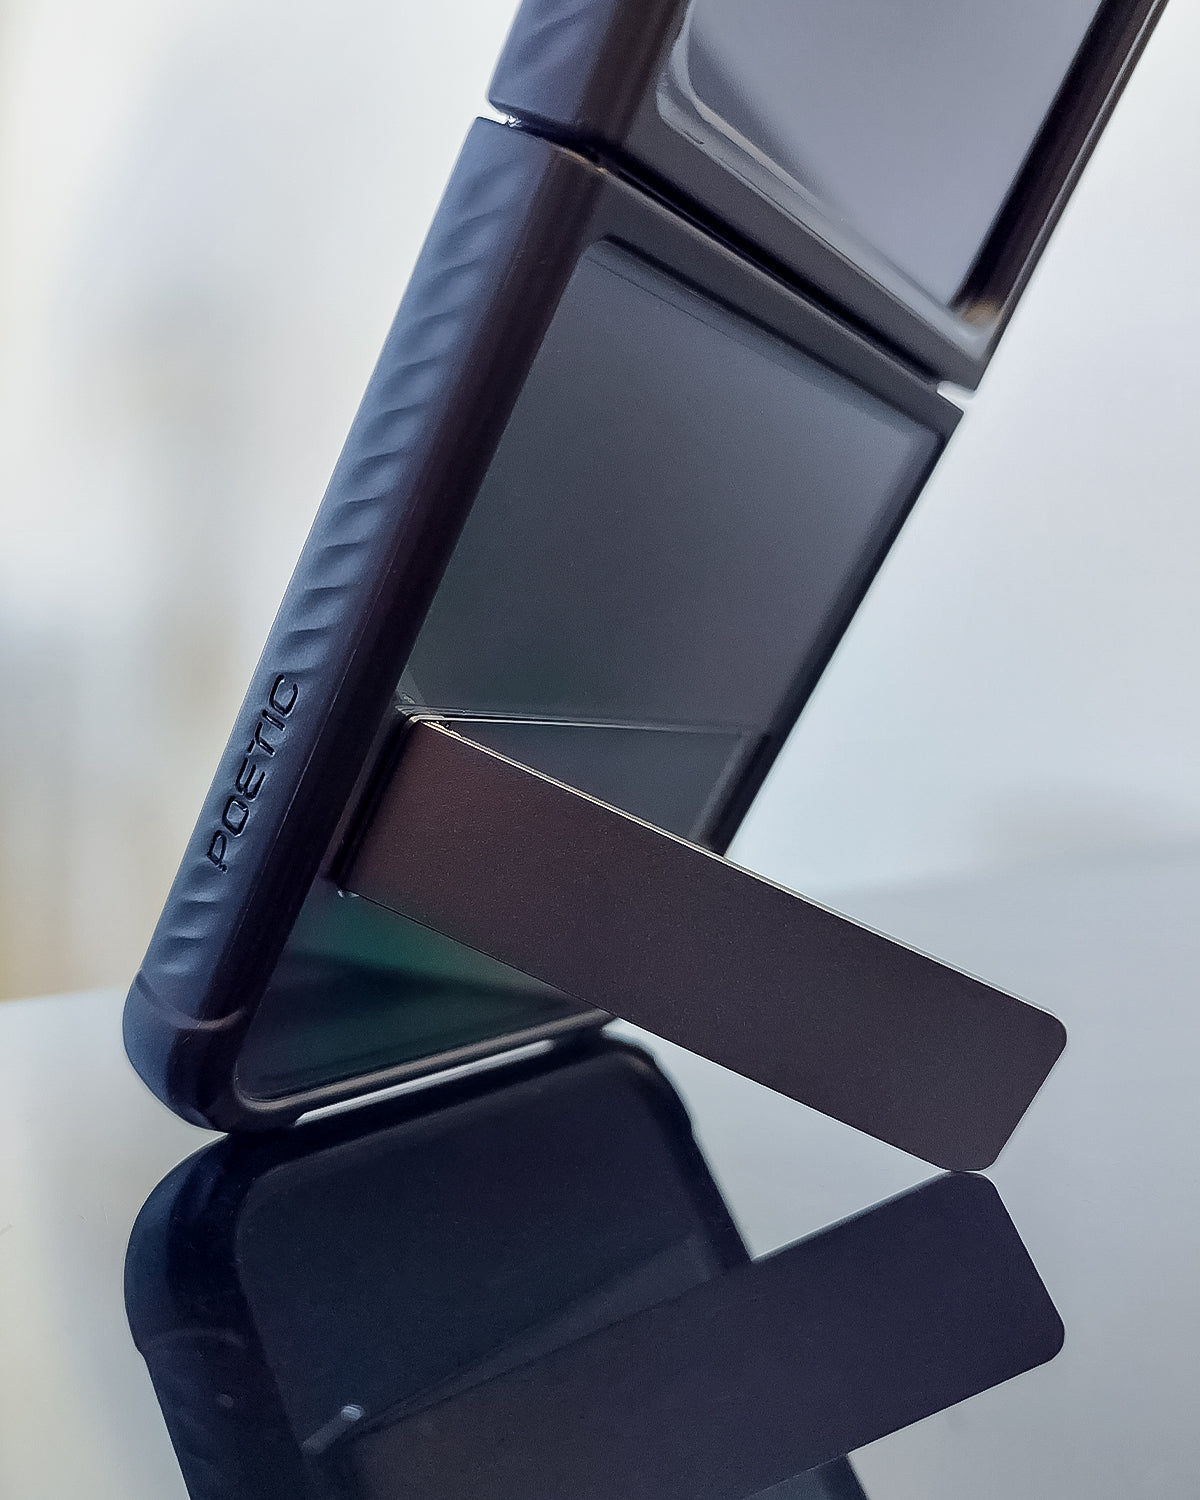 Samsung Galaxy Z Flip 5 Cases